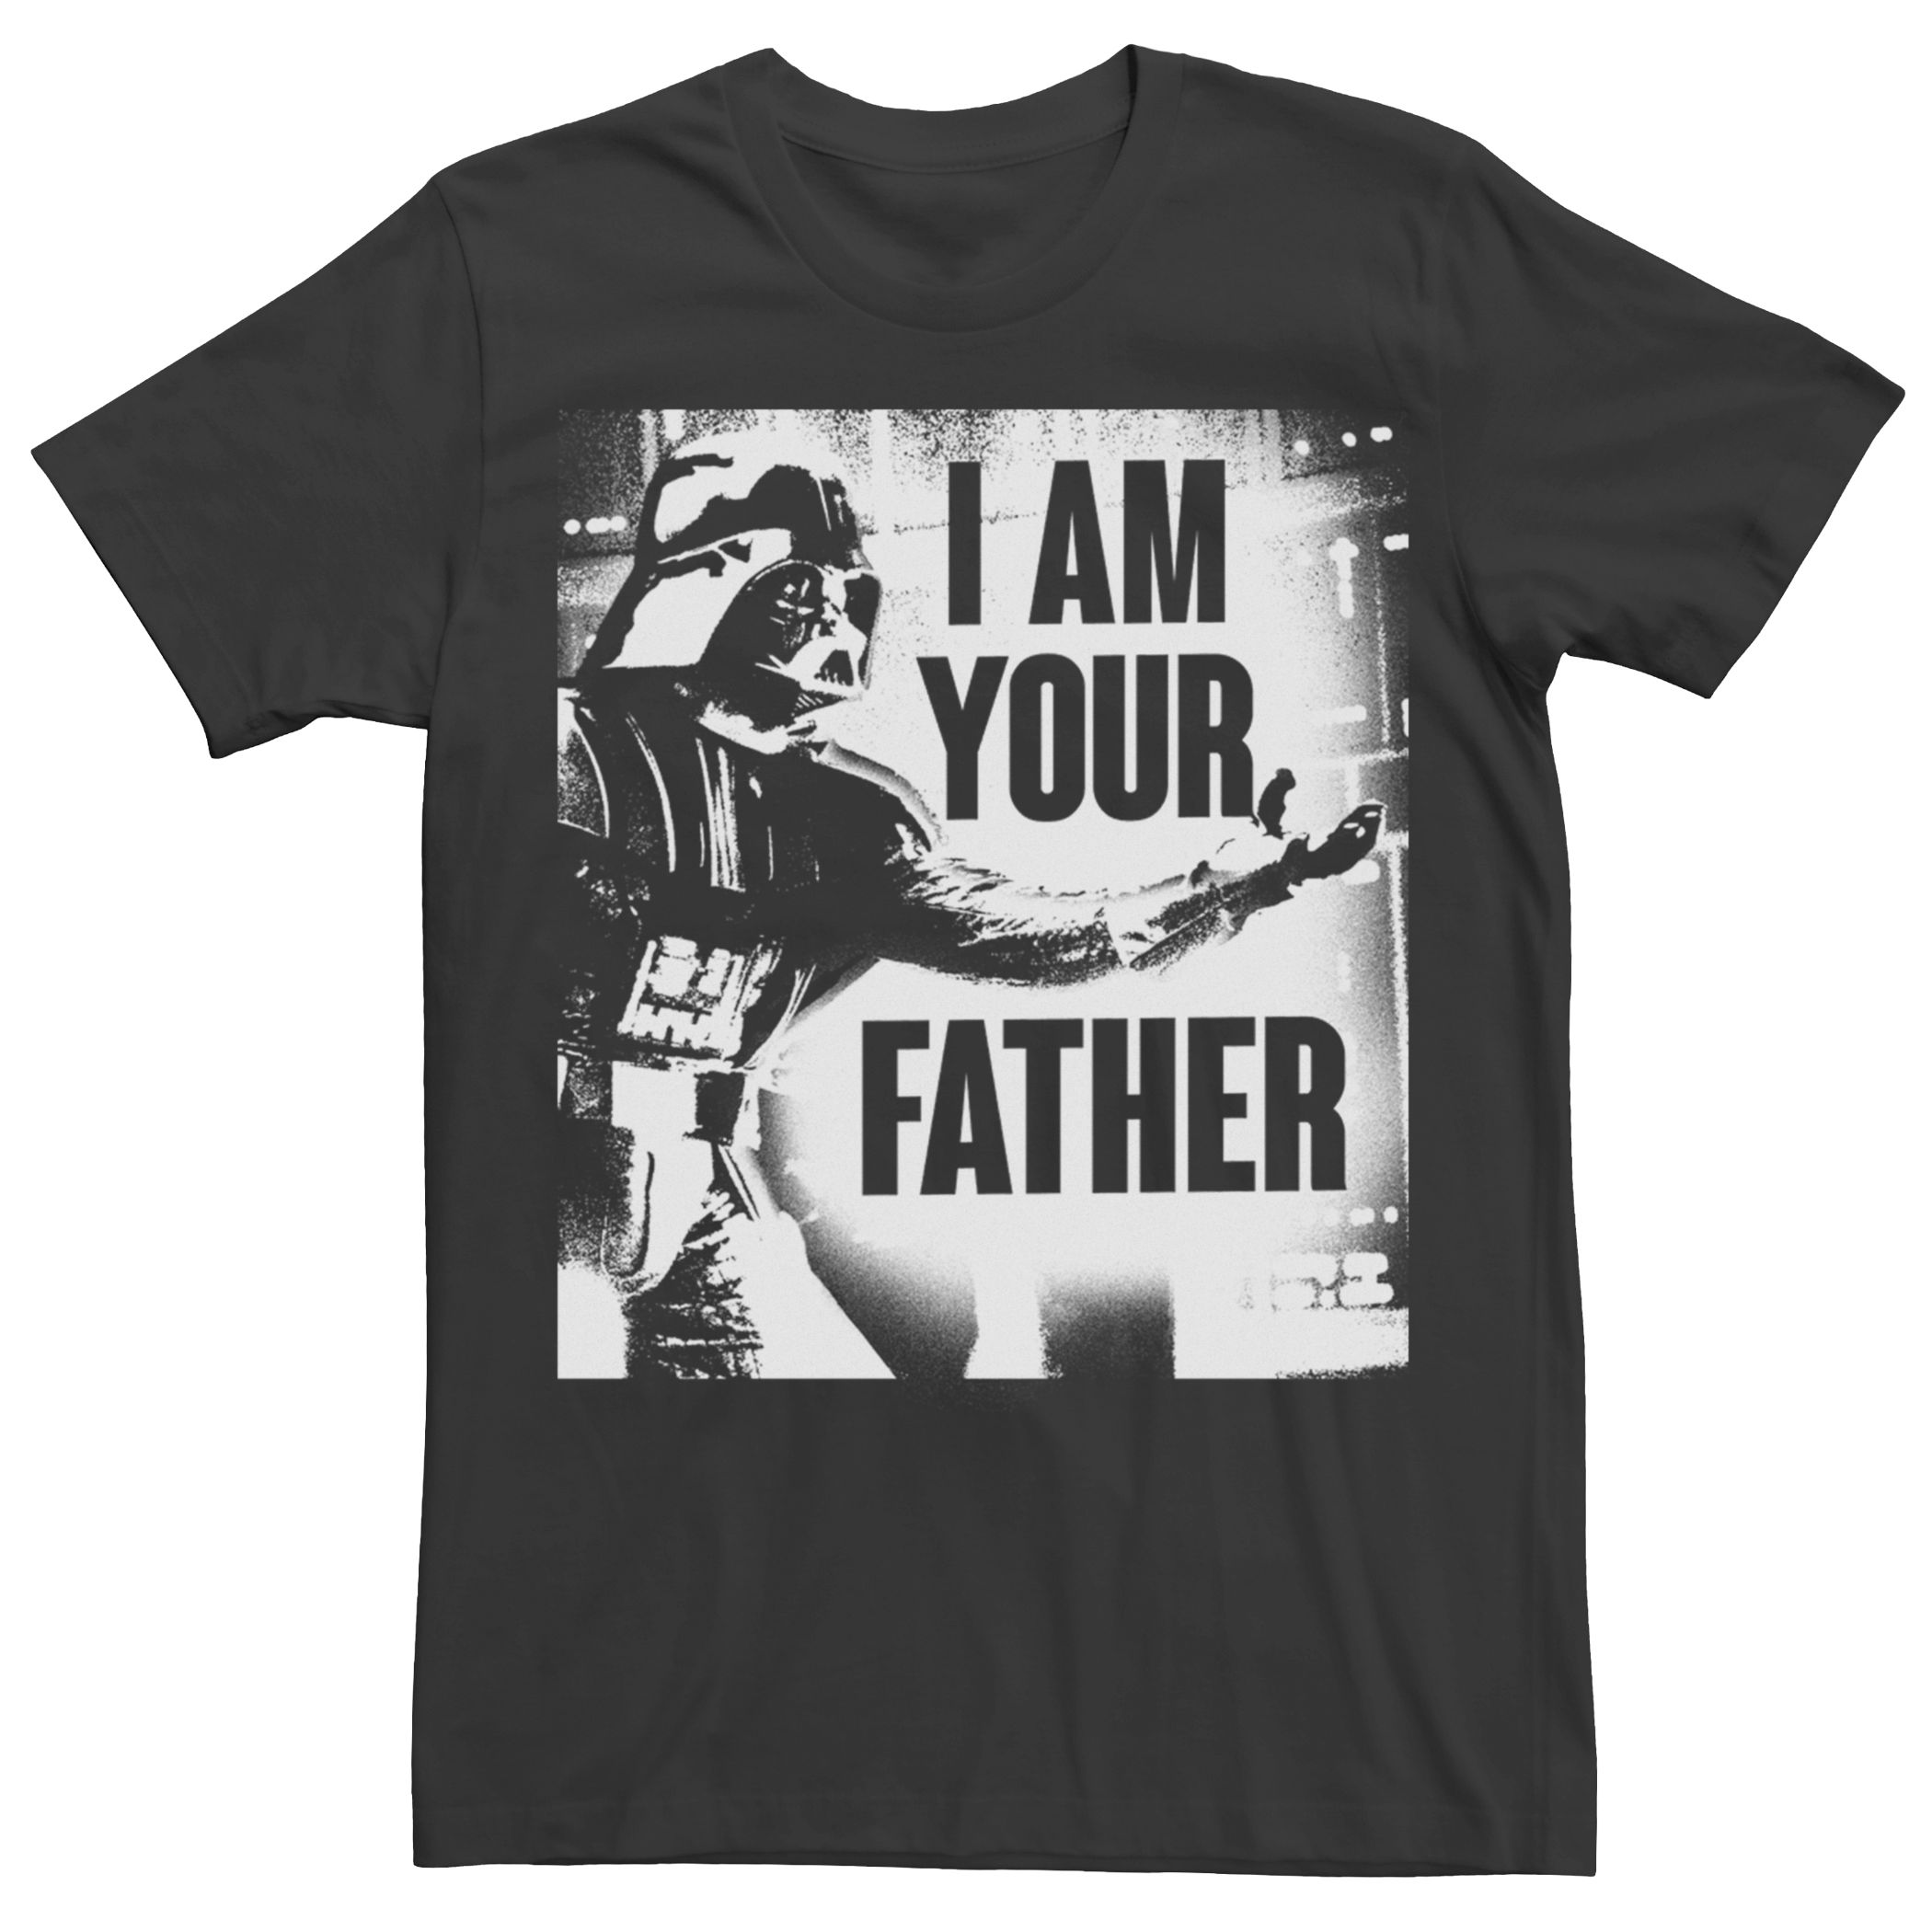 Мужская футболка с портретом Дарта Вейдера «Звездные войны» Licensed Character мужская футболка с костюмом дарта вейдера звездные войны licensed character